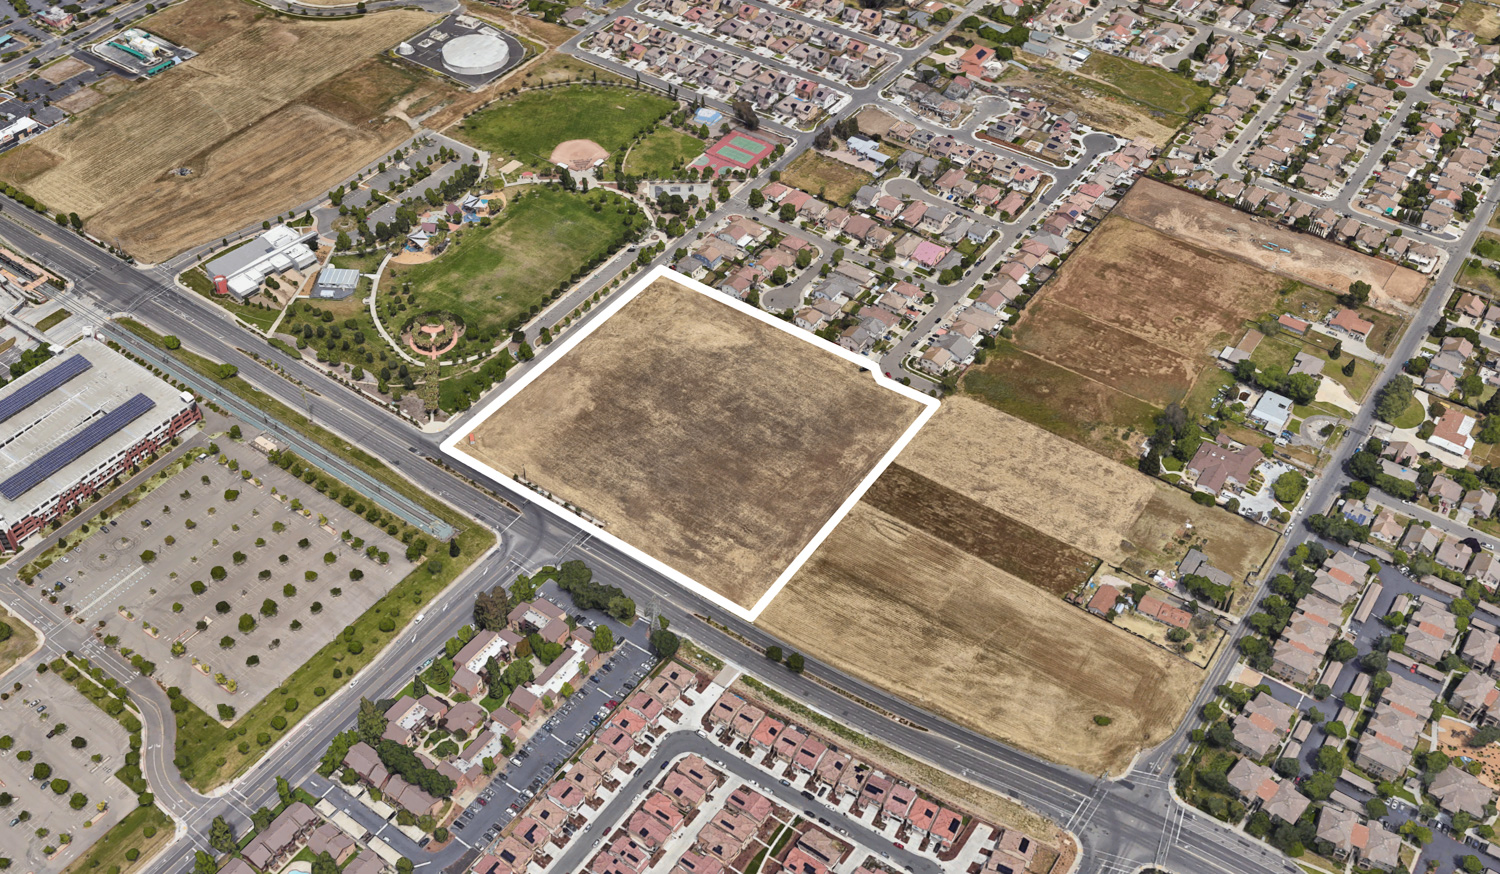 7400 Shasta Avenue outlined approximately by YIMBY, image via Google Satellite